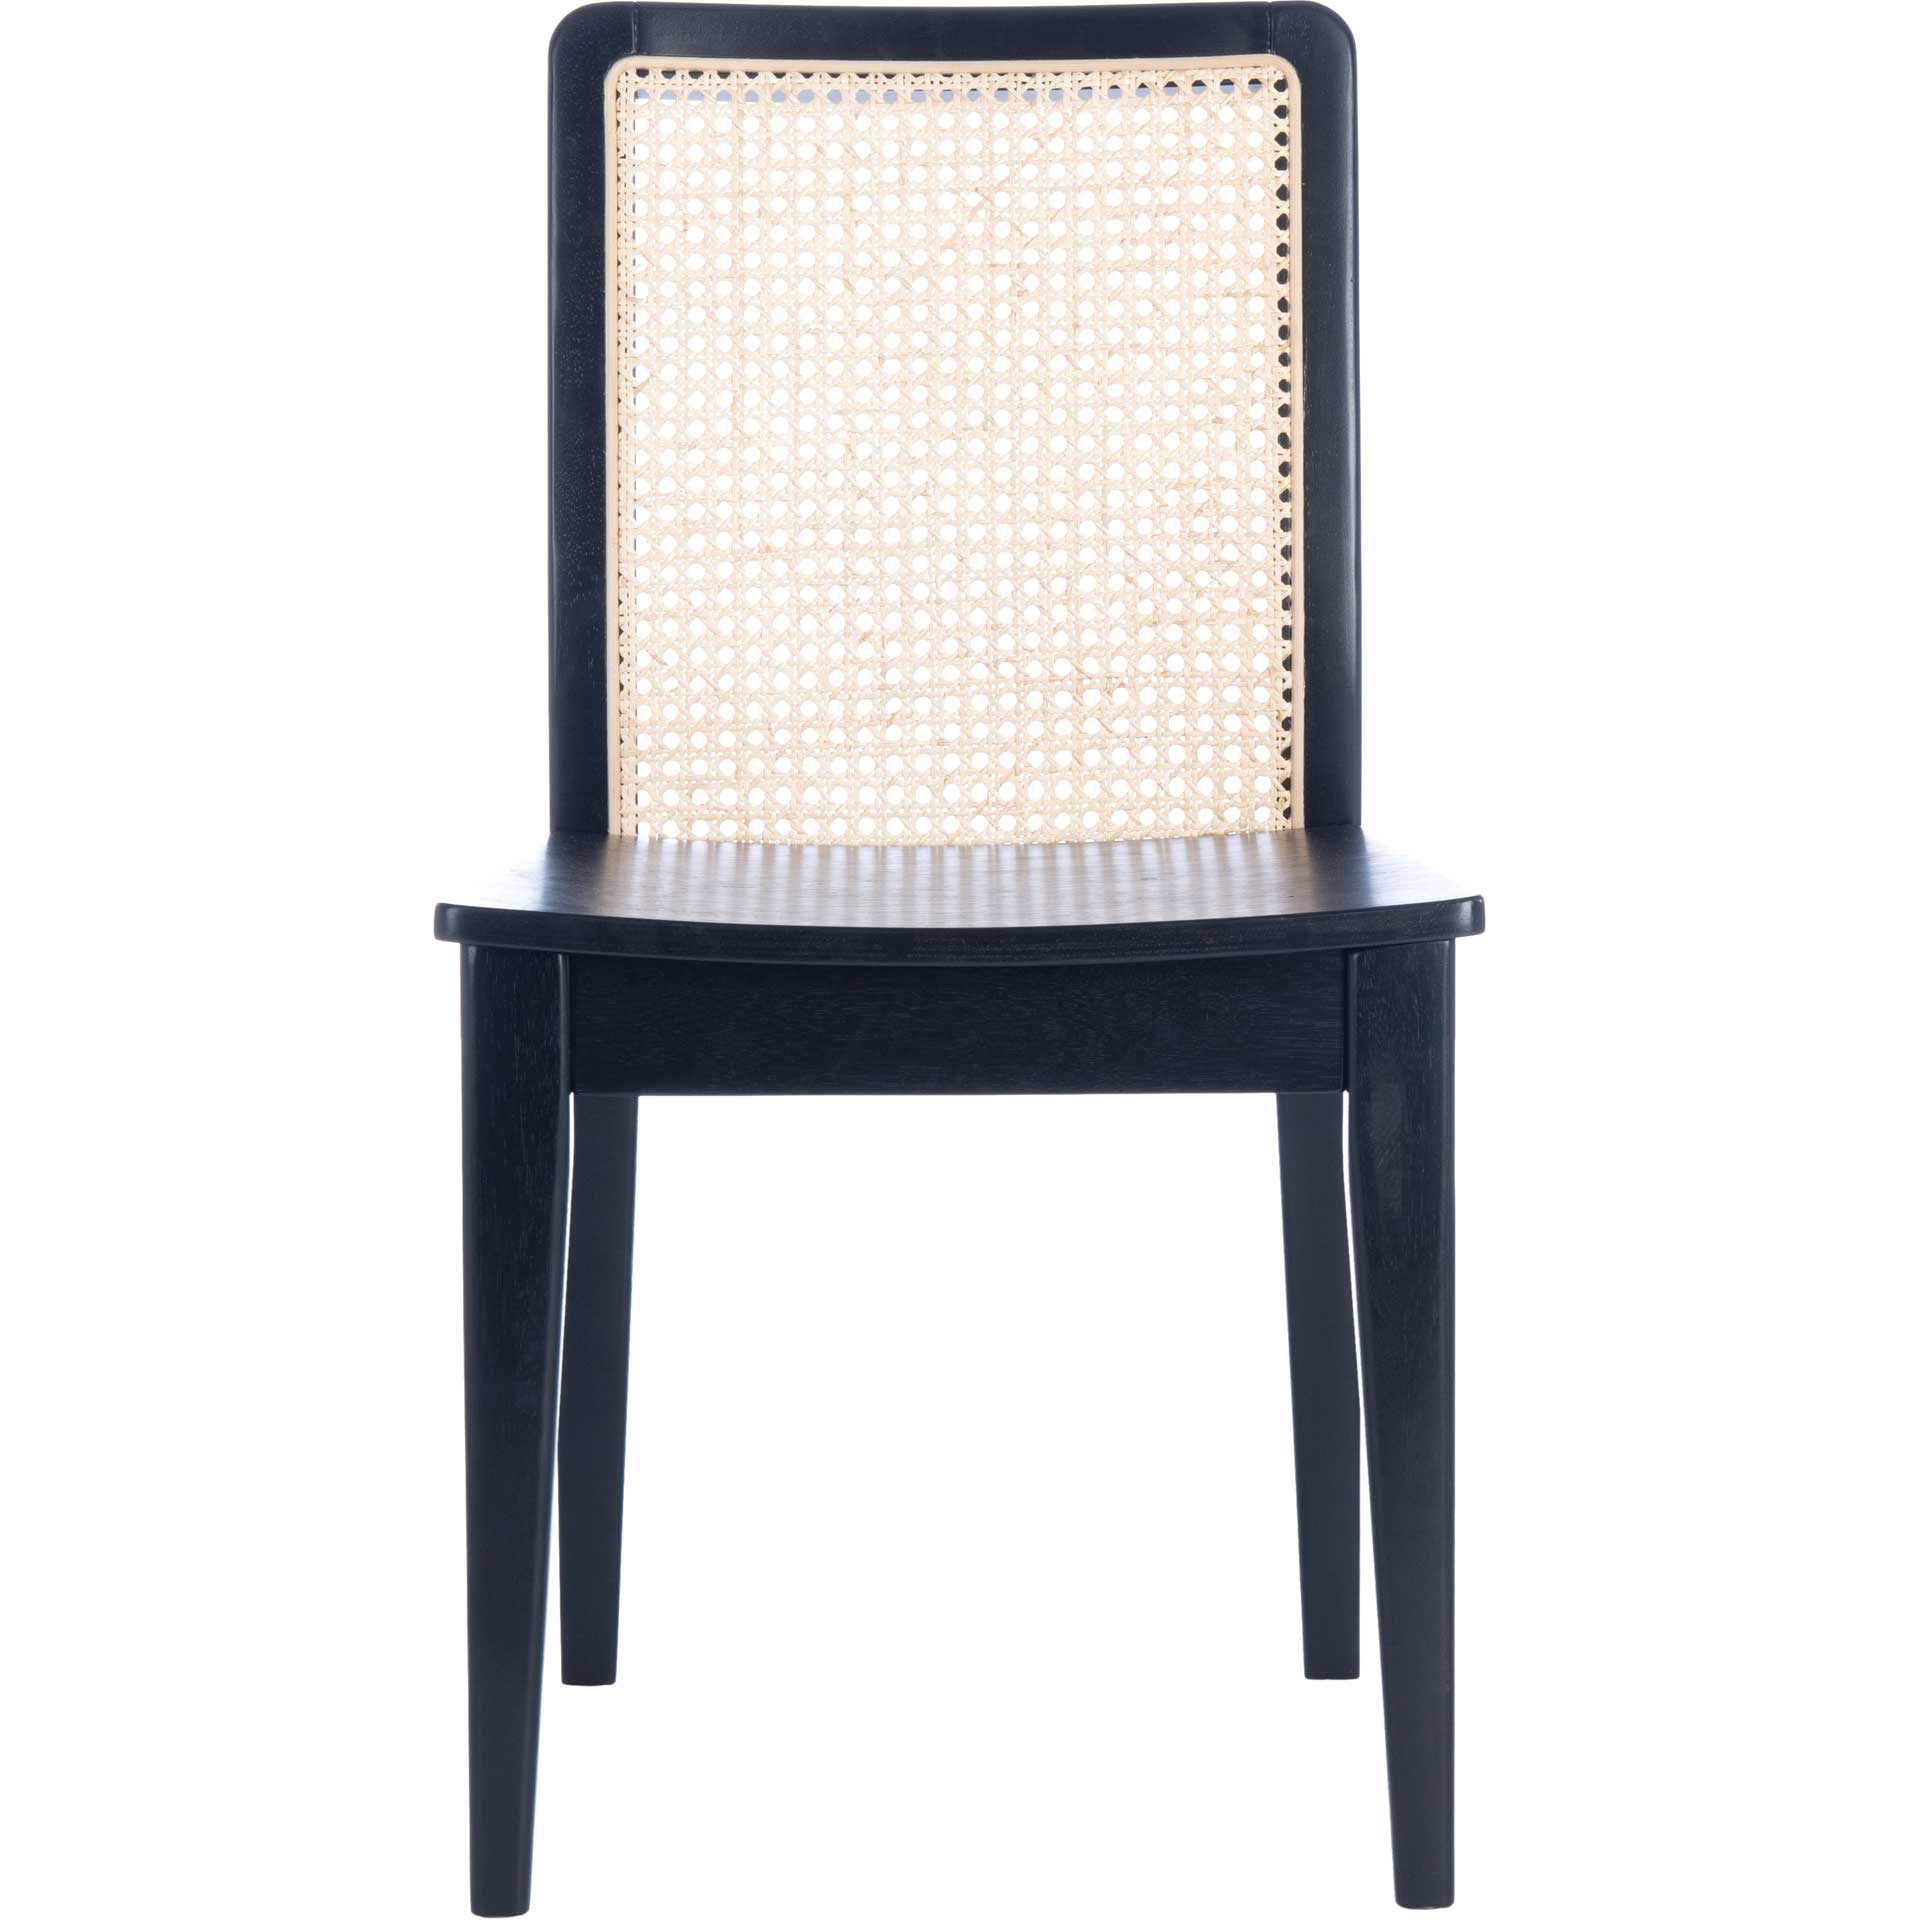 Belomy Rattan Dining Chair Black/Natural (Set of 2)